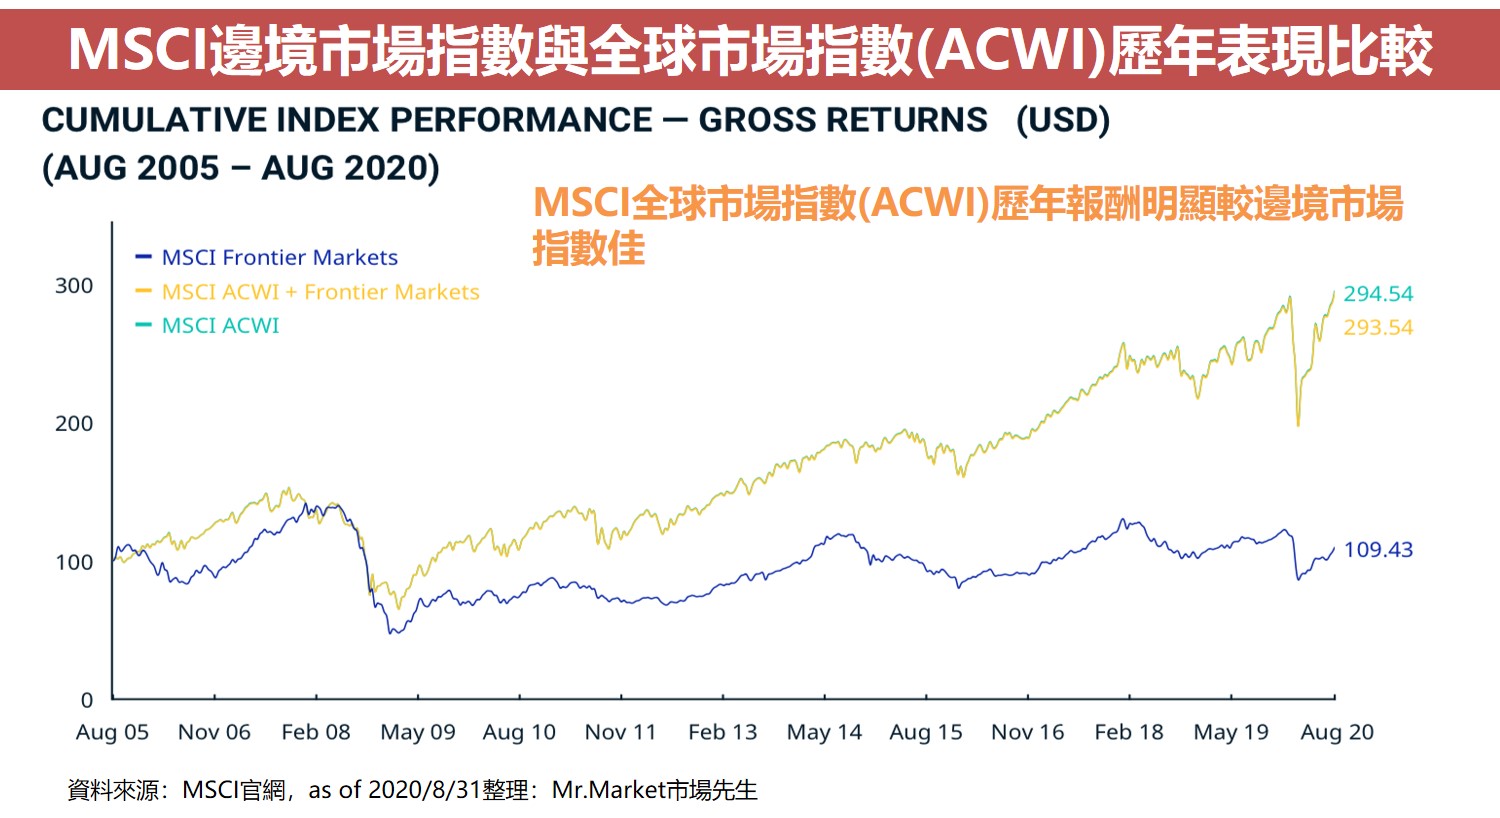 MSCI邊境市場指數與全球市場指數(ACWI)歷年表現比較